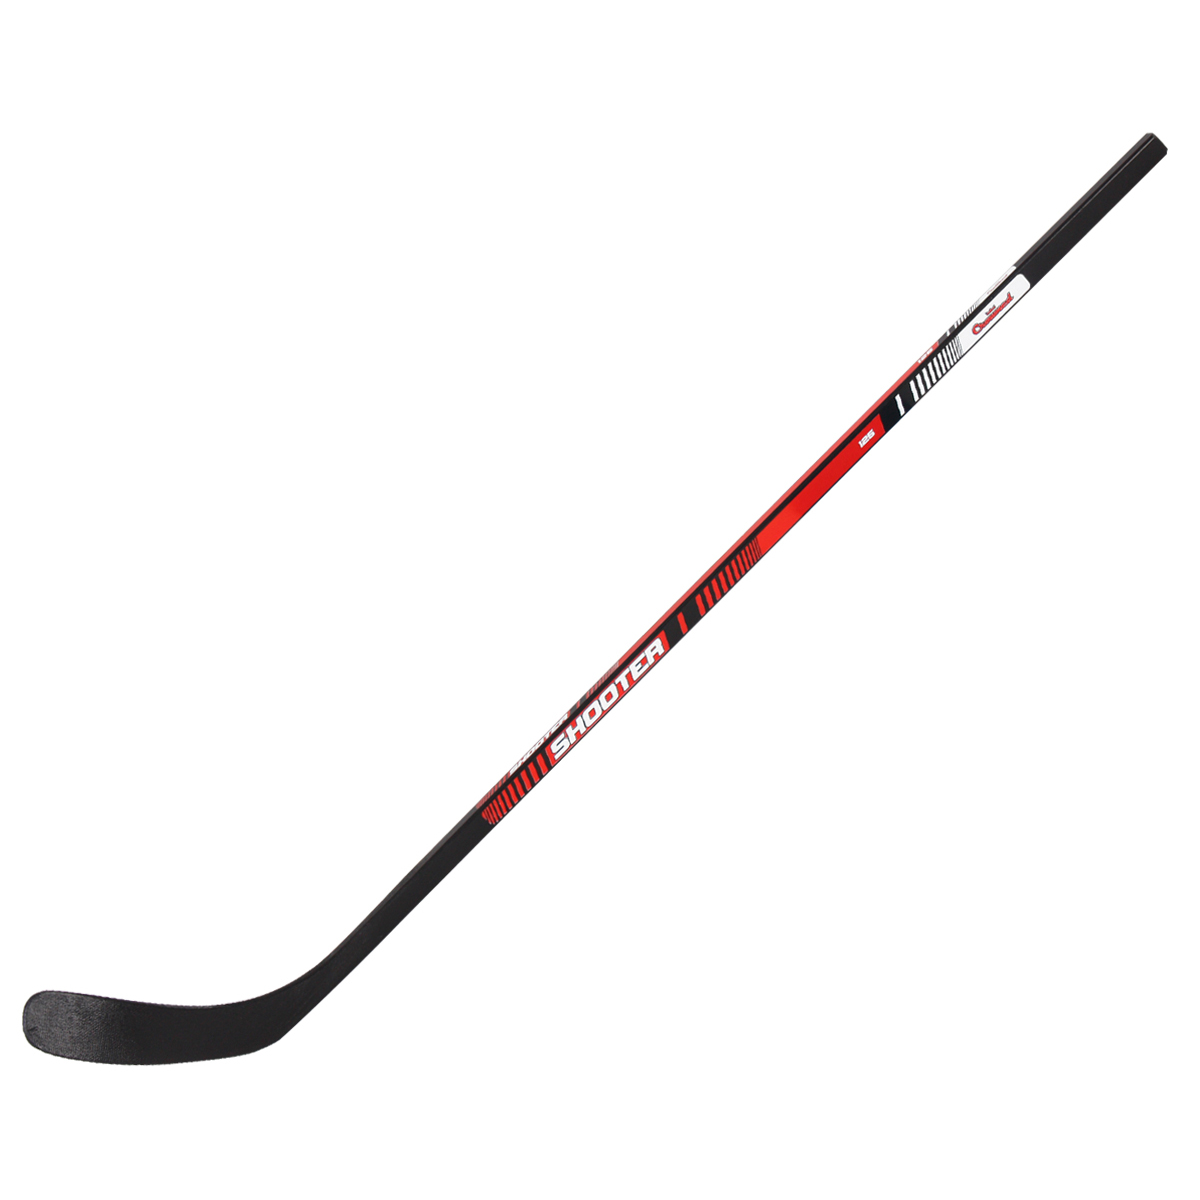 SHOOTER 125 cm - Kids’ hockey stick